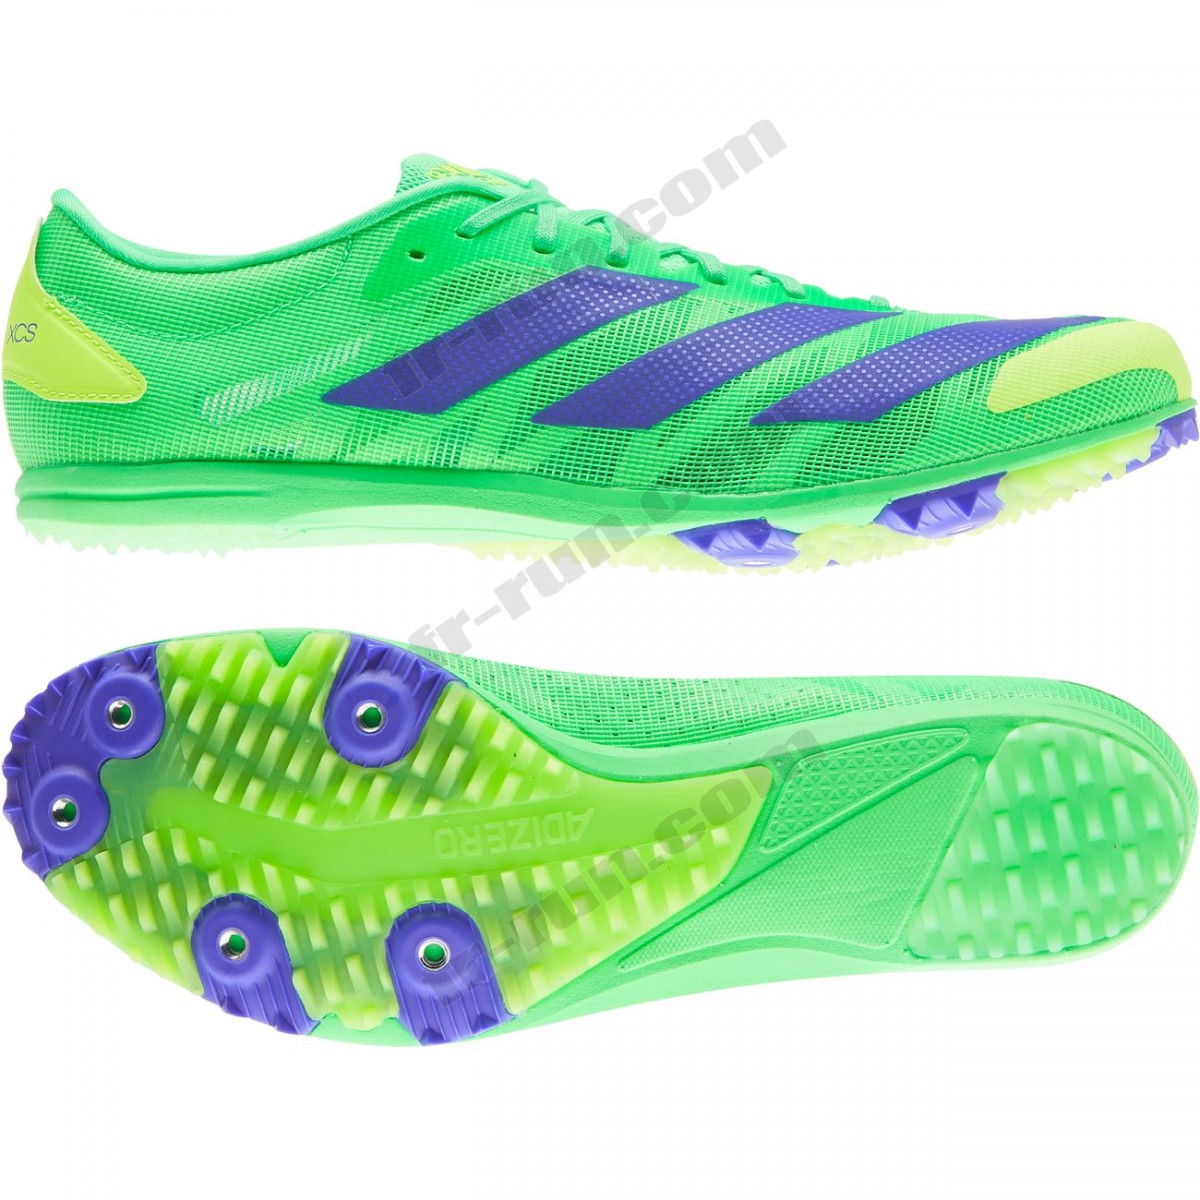 Adidas/Athlétisme adulte ADIDAS Chaussures adidas Adizero XCS √ Nouveau style √ Soldes - -7